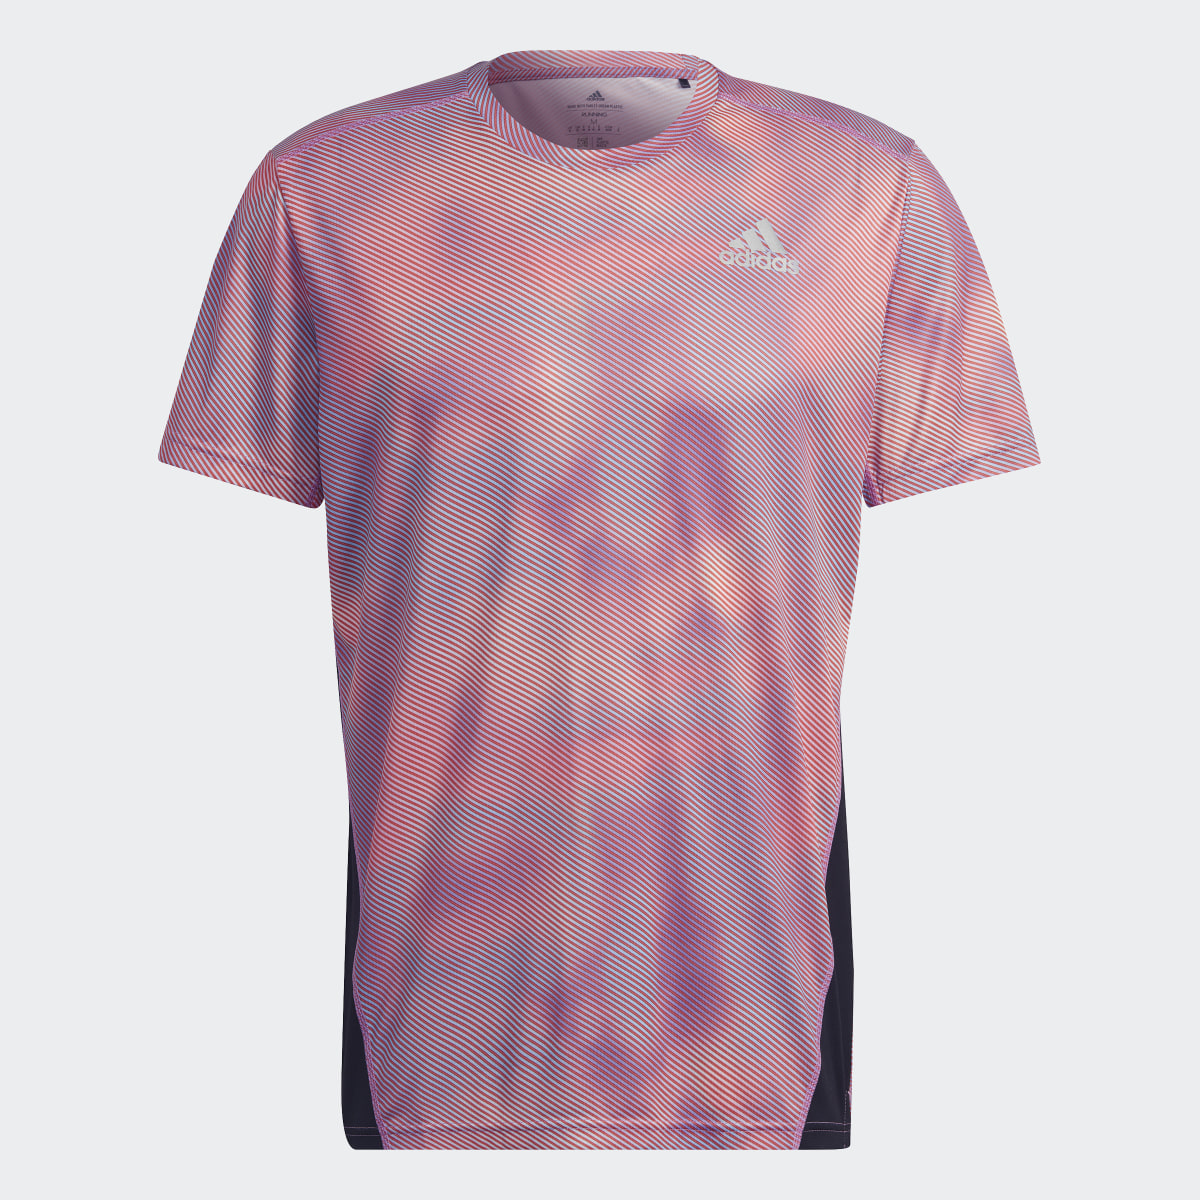 Adidas T-shirt Own the Run Colorblock. 5